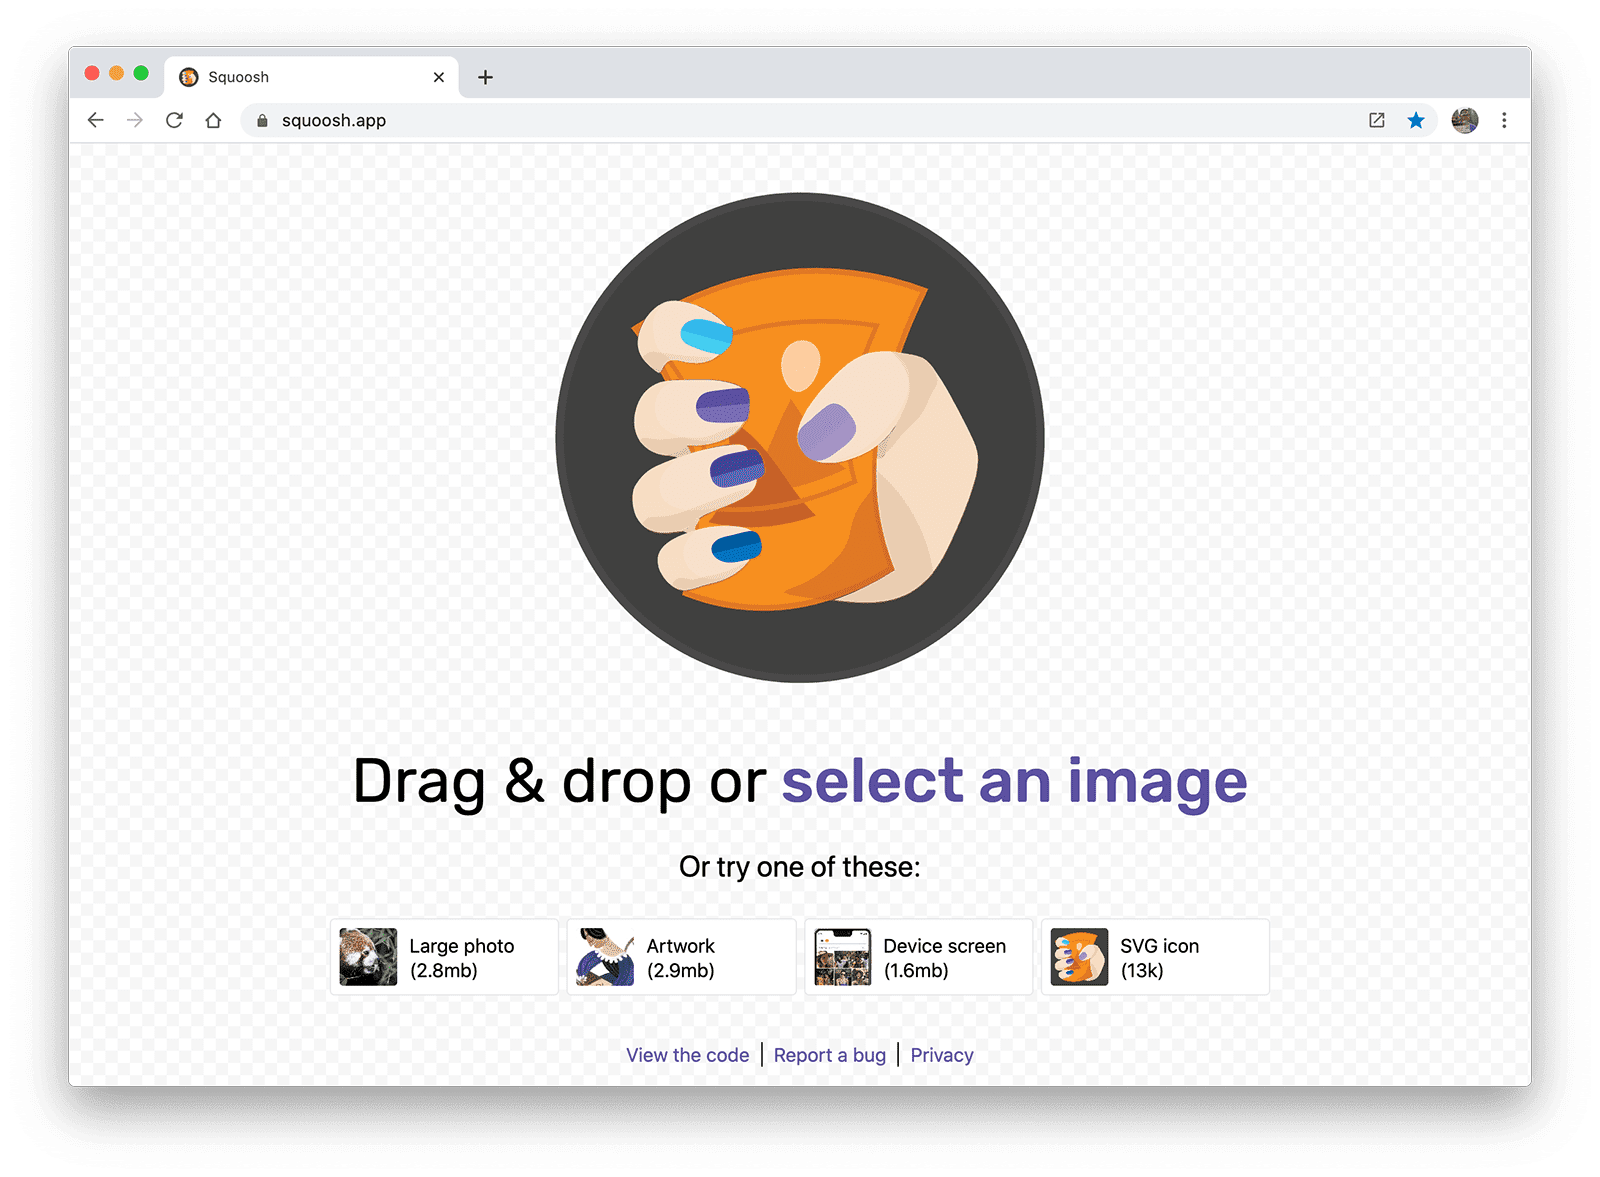 Squoosh 的圖片壓縮網頁應用程式的螢幕截圖。